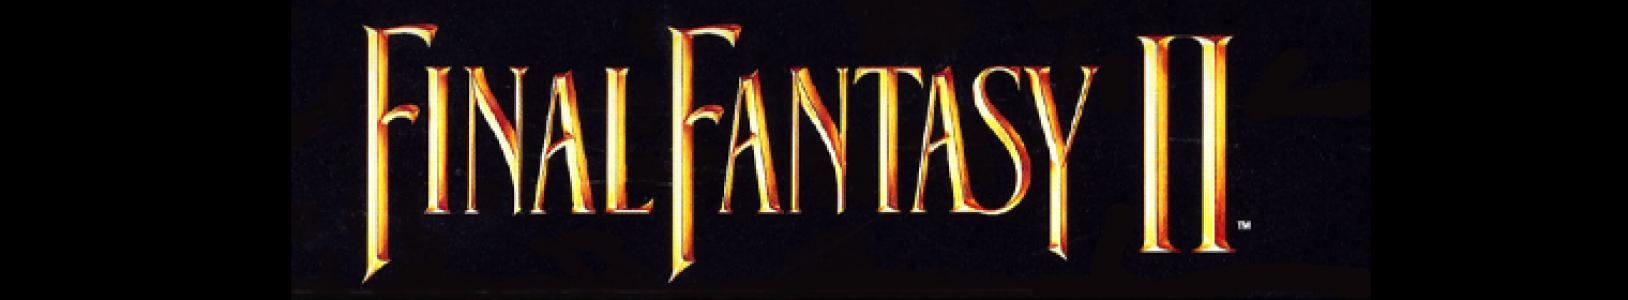 Final Fantasy II banner